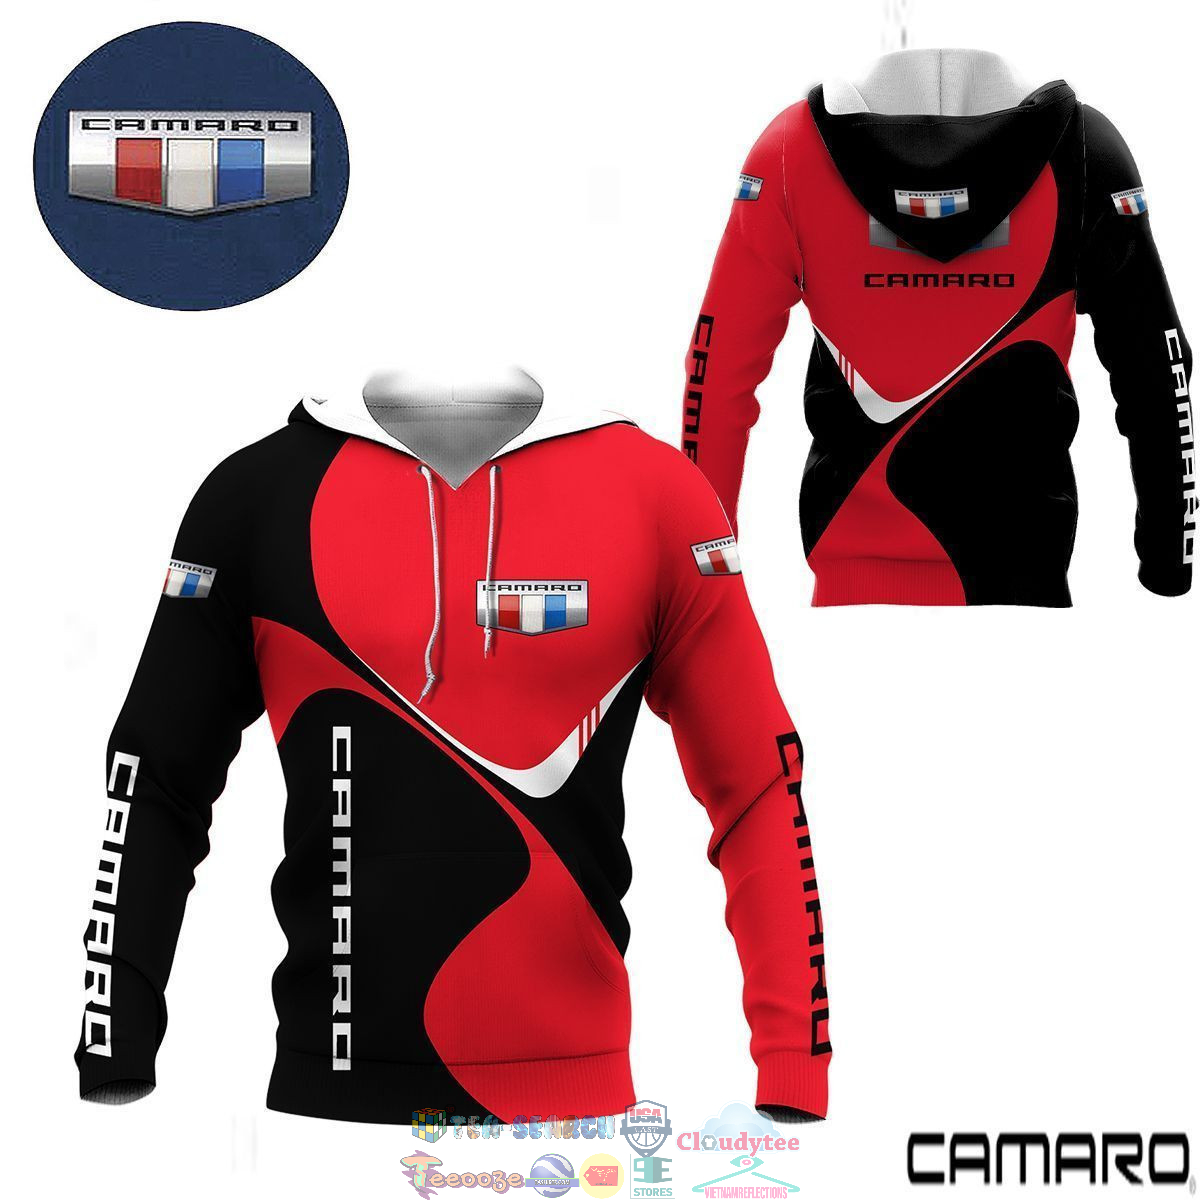 Chevrolet Camaro ver 6 3D hoodie and t-shirt – Saleoff